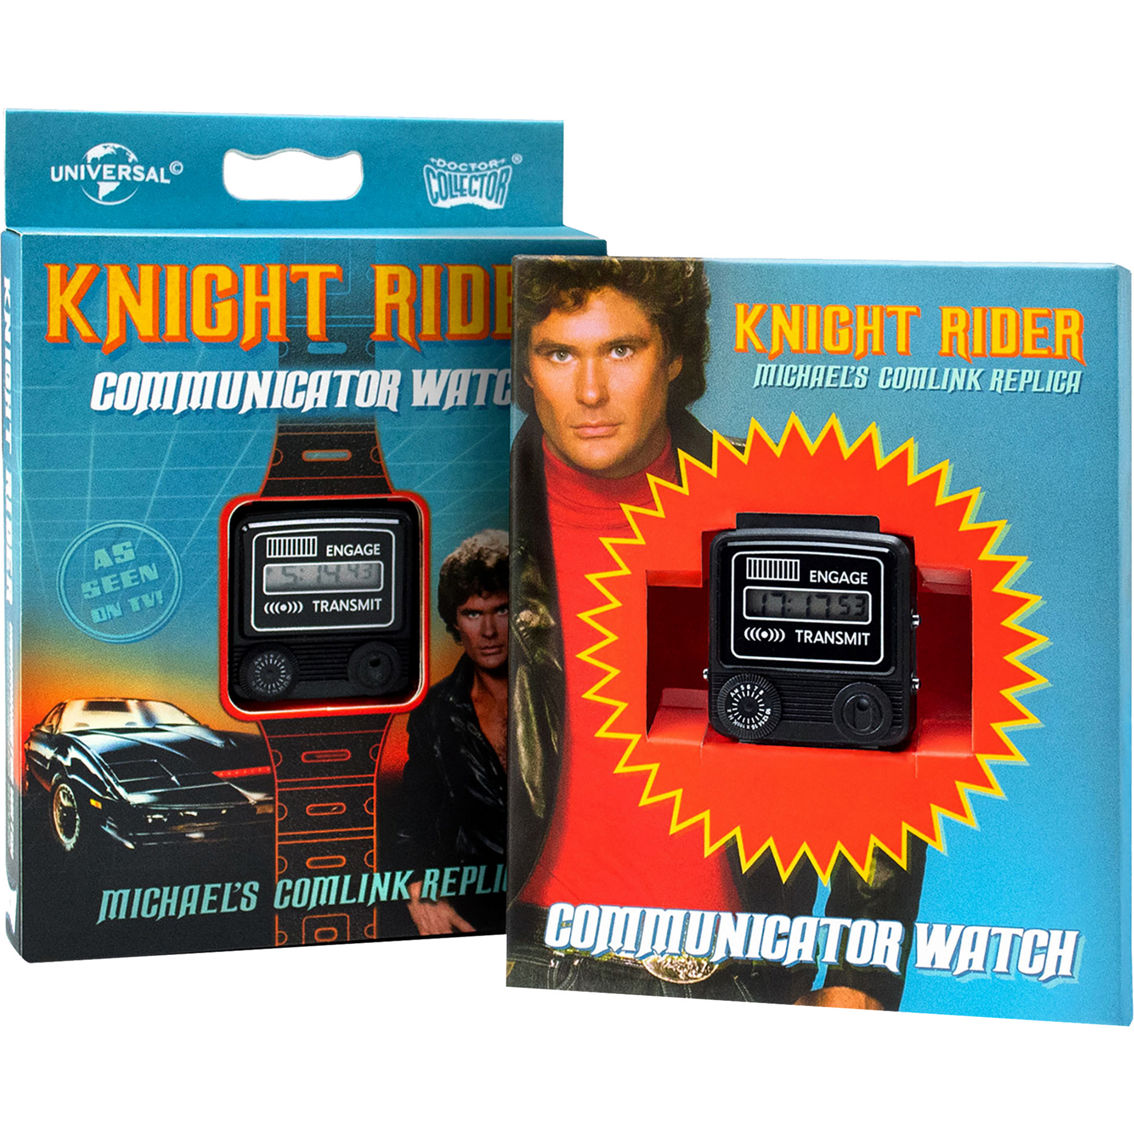 Knight Rider: Communicator Watch - Image 2 of 6